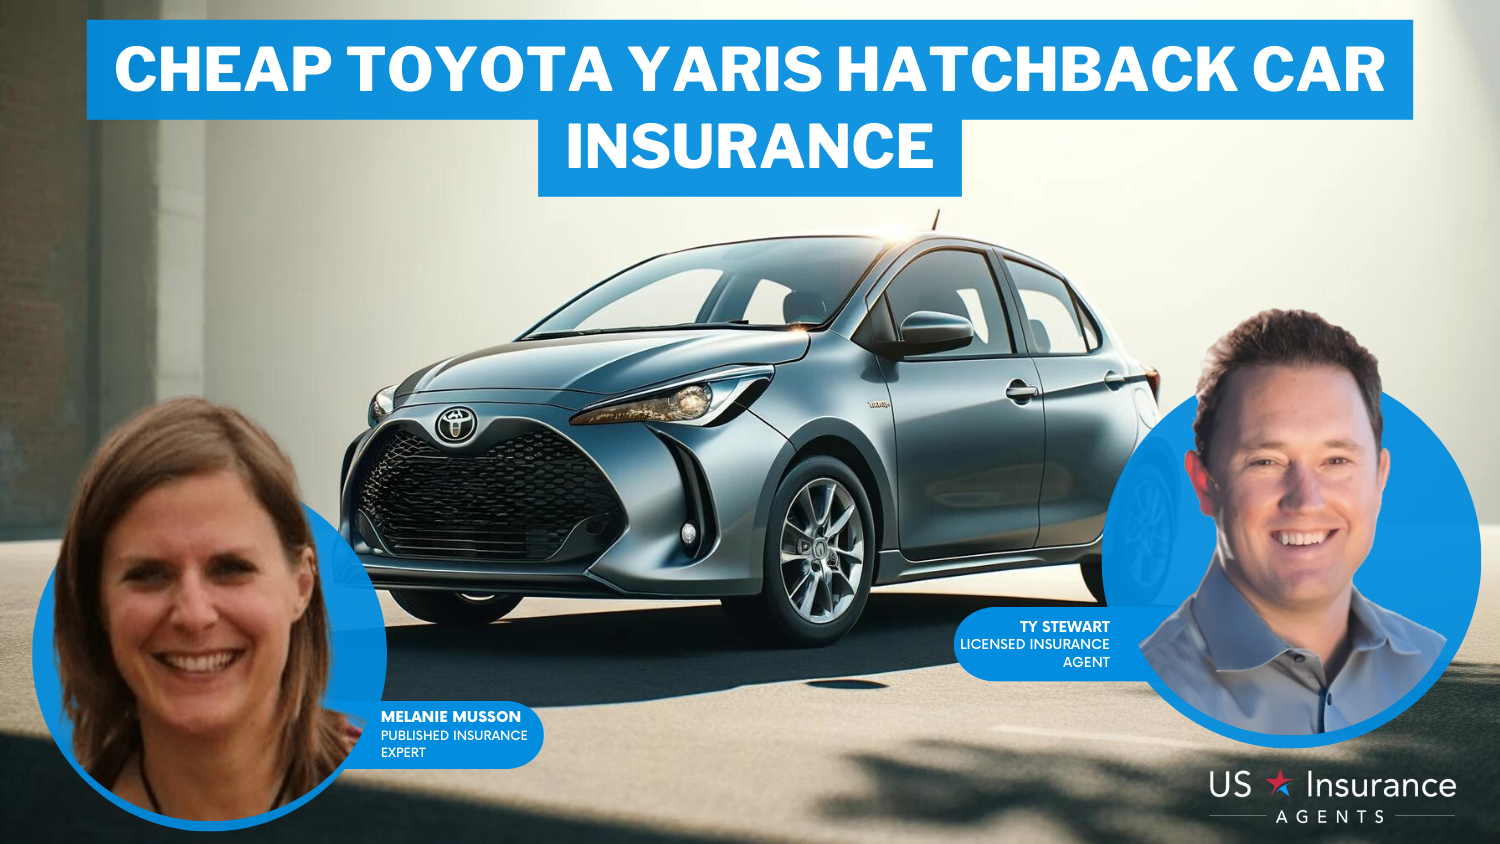 Cheap Toyota Yaris Hatchback Car Insurance: American Family, State Farm, and Progressive